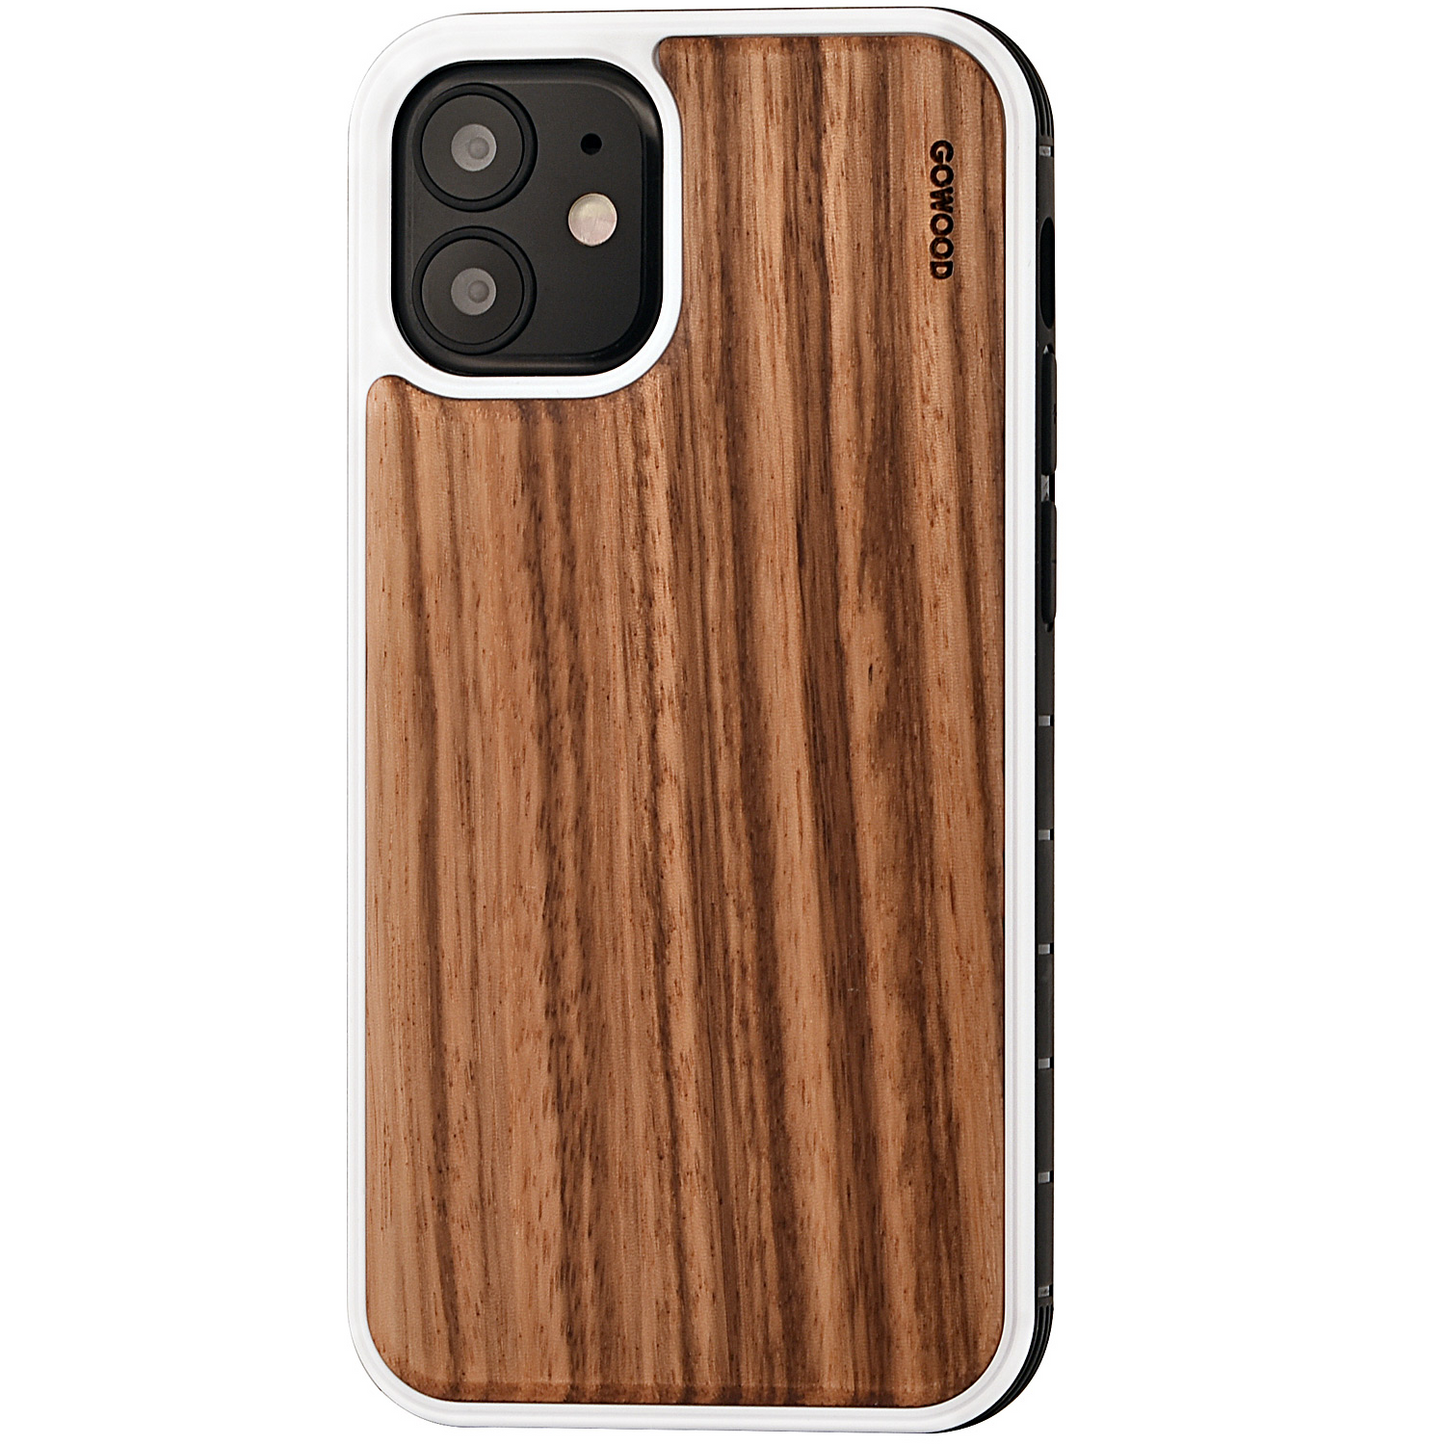 iPhone 12 Mini wood case zebra backside with TPU bumper and white PC